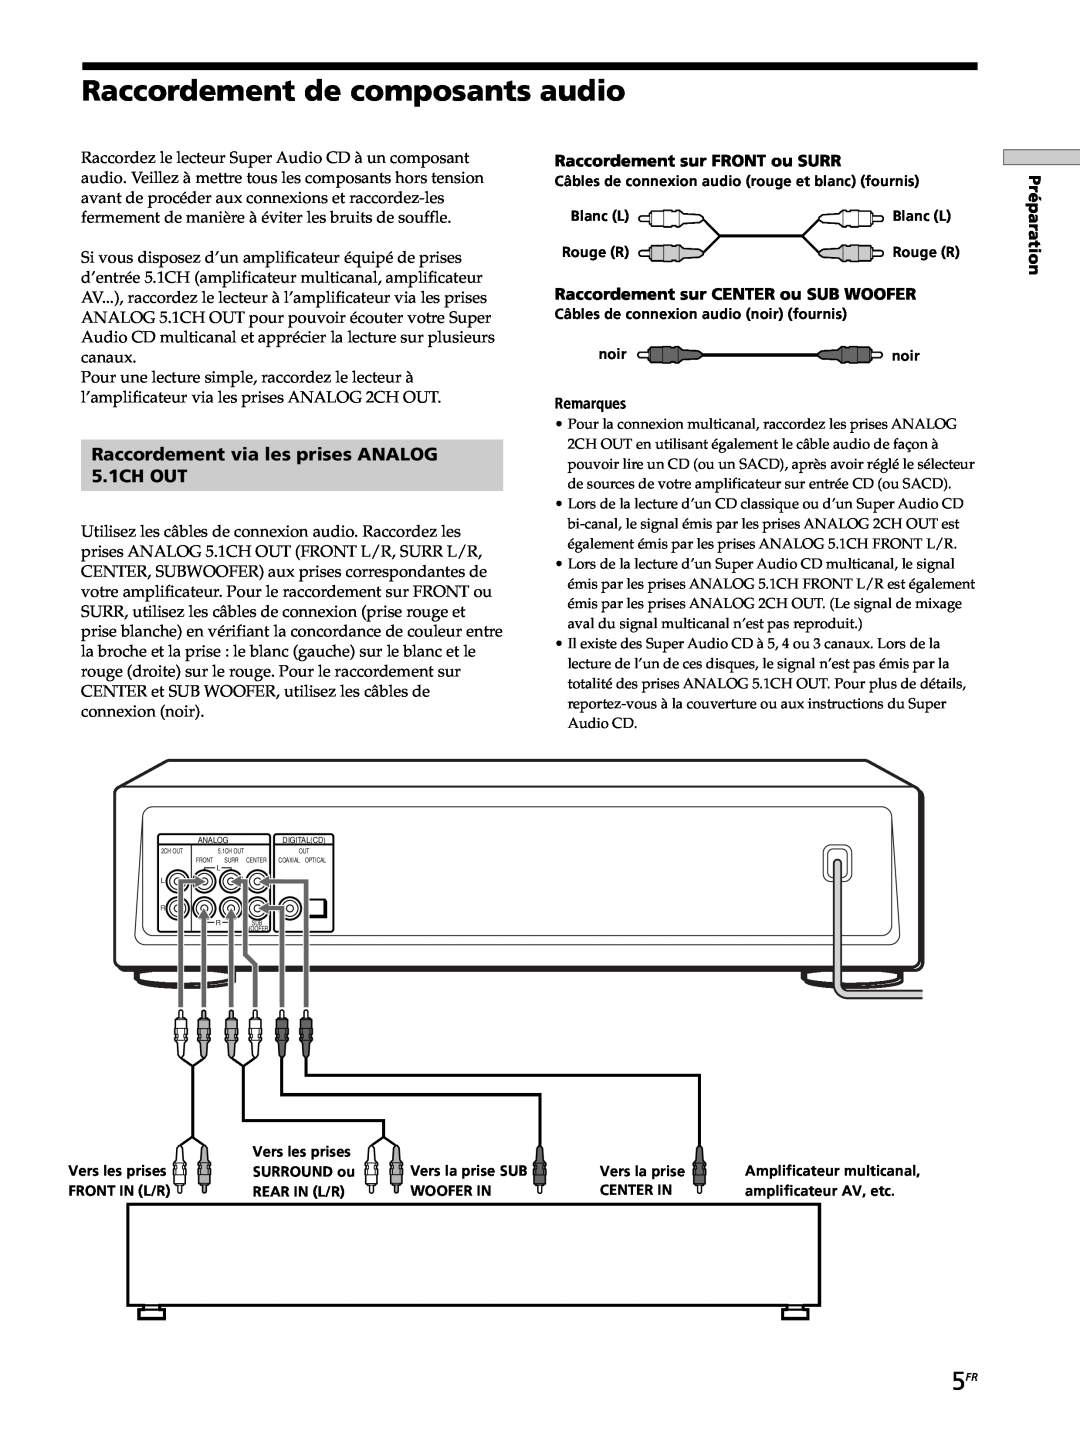 Sony SCD-XB770 operating instructions Raccordement de composants audio, Raccordement via les prises ANALOG 5.1CH OUT 